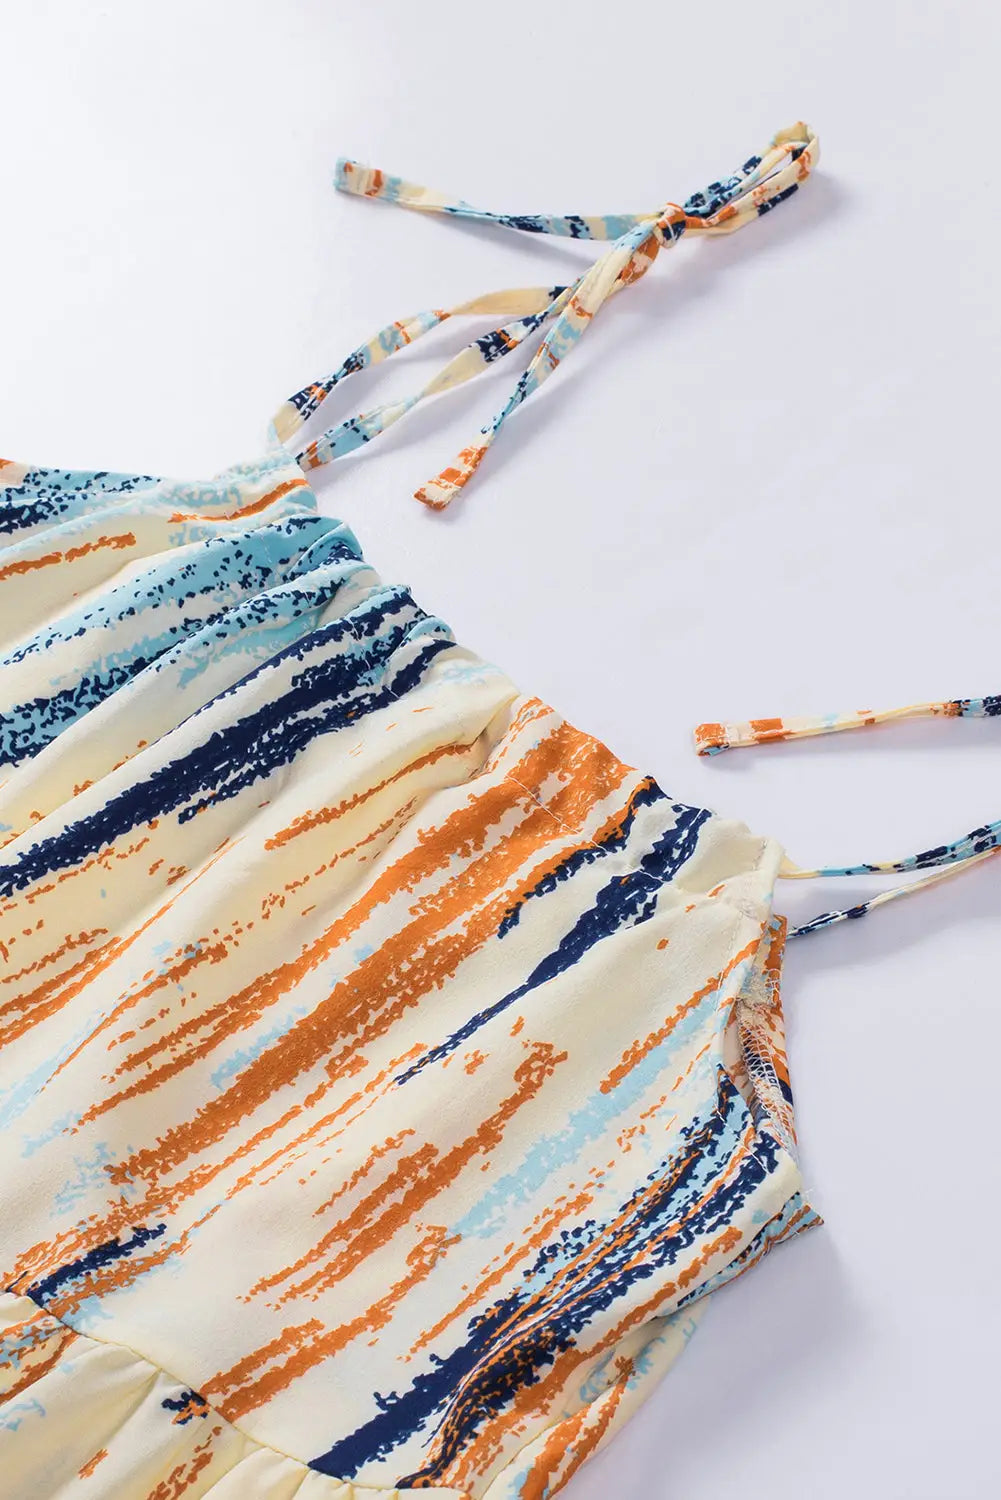 Multicolor pattern print lace-up spaghetti strap shift mini dress - dresses